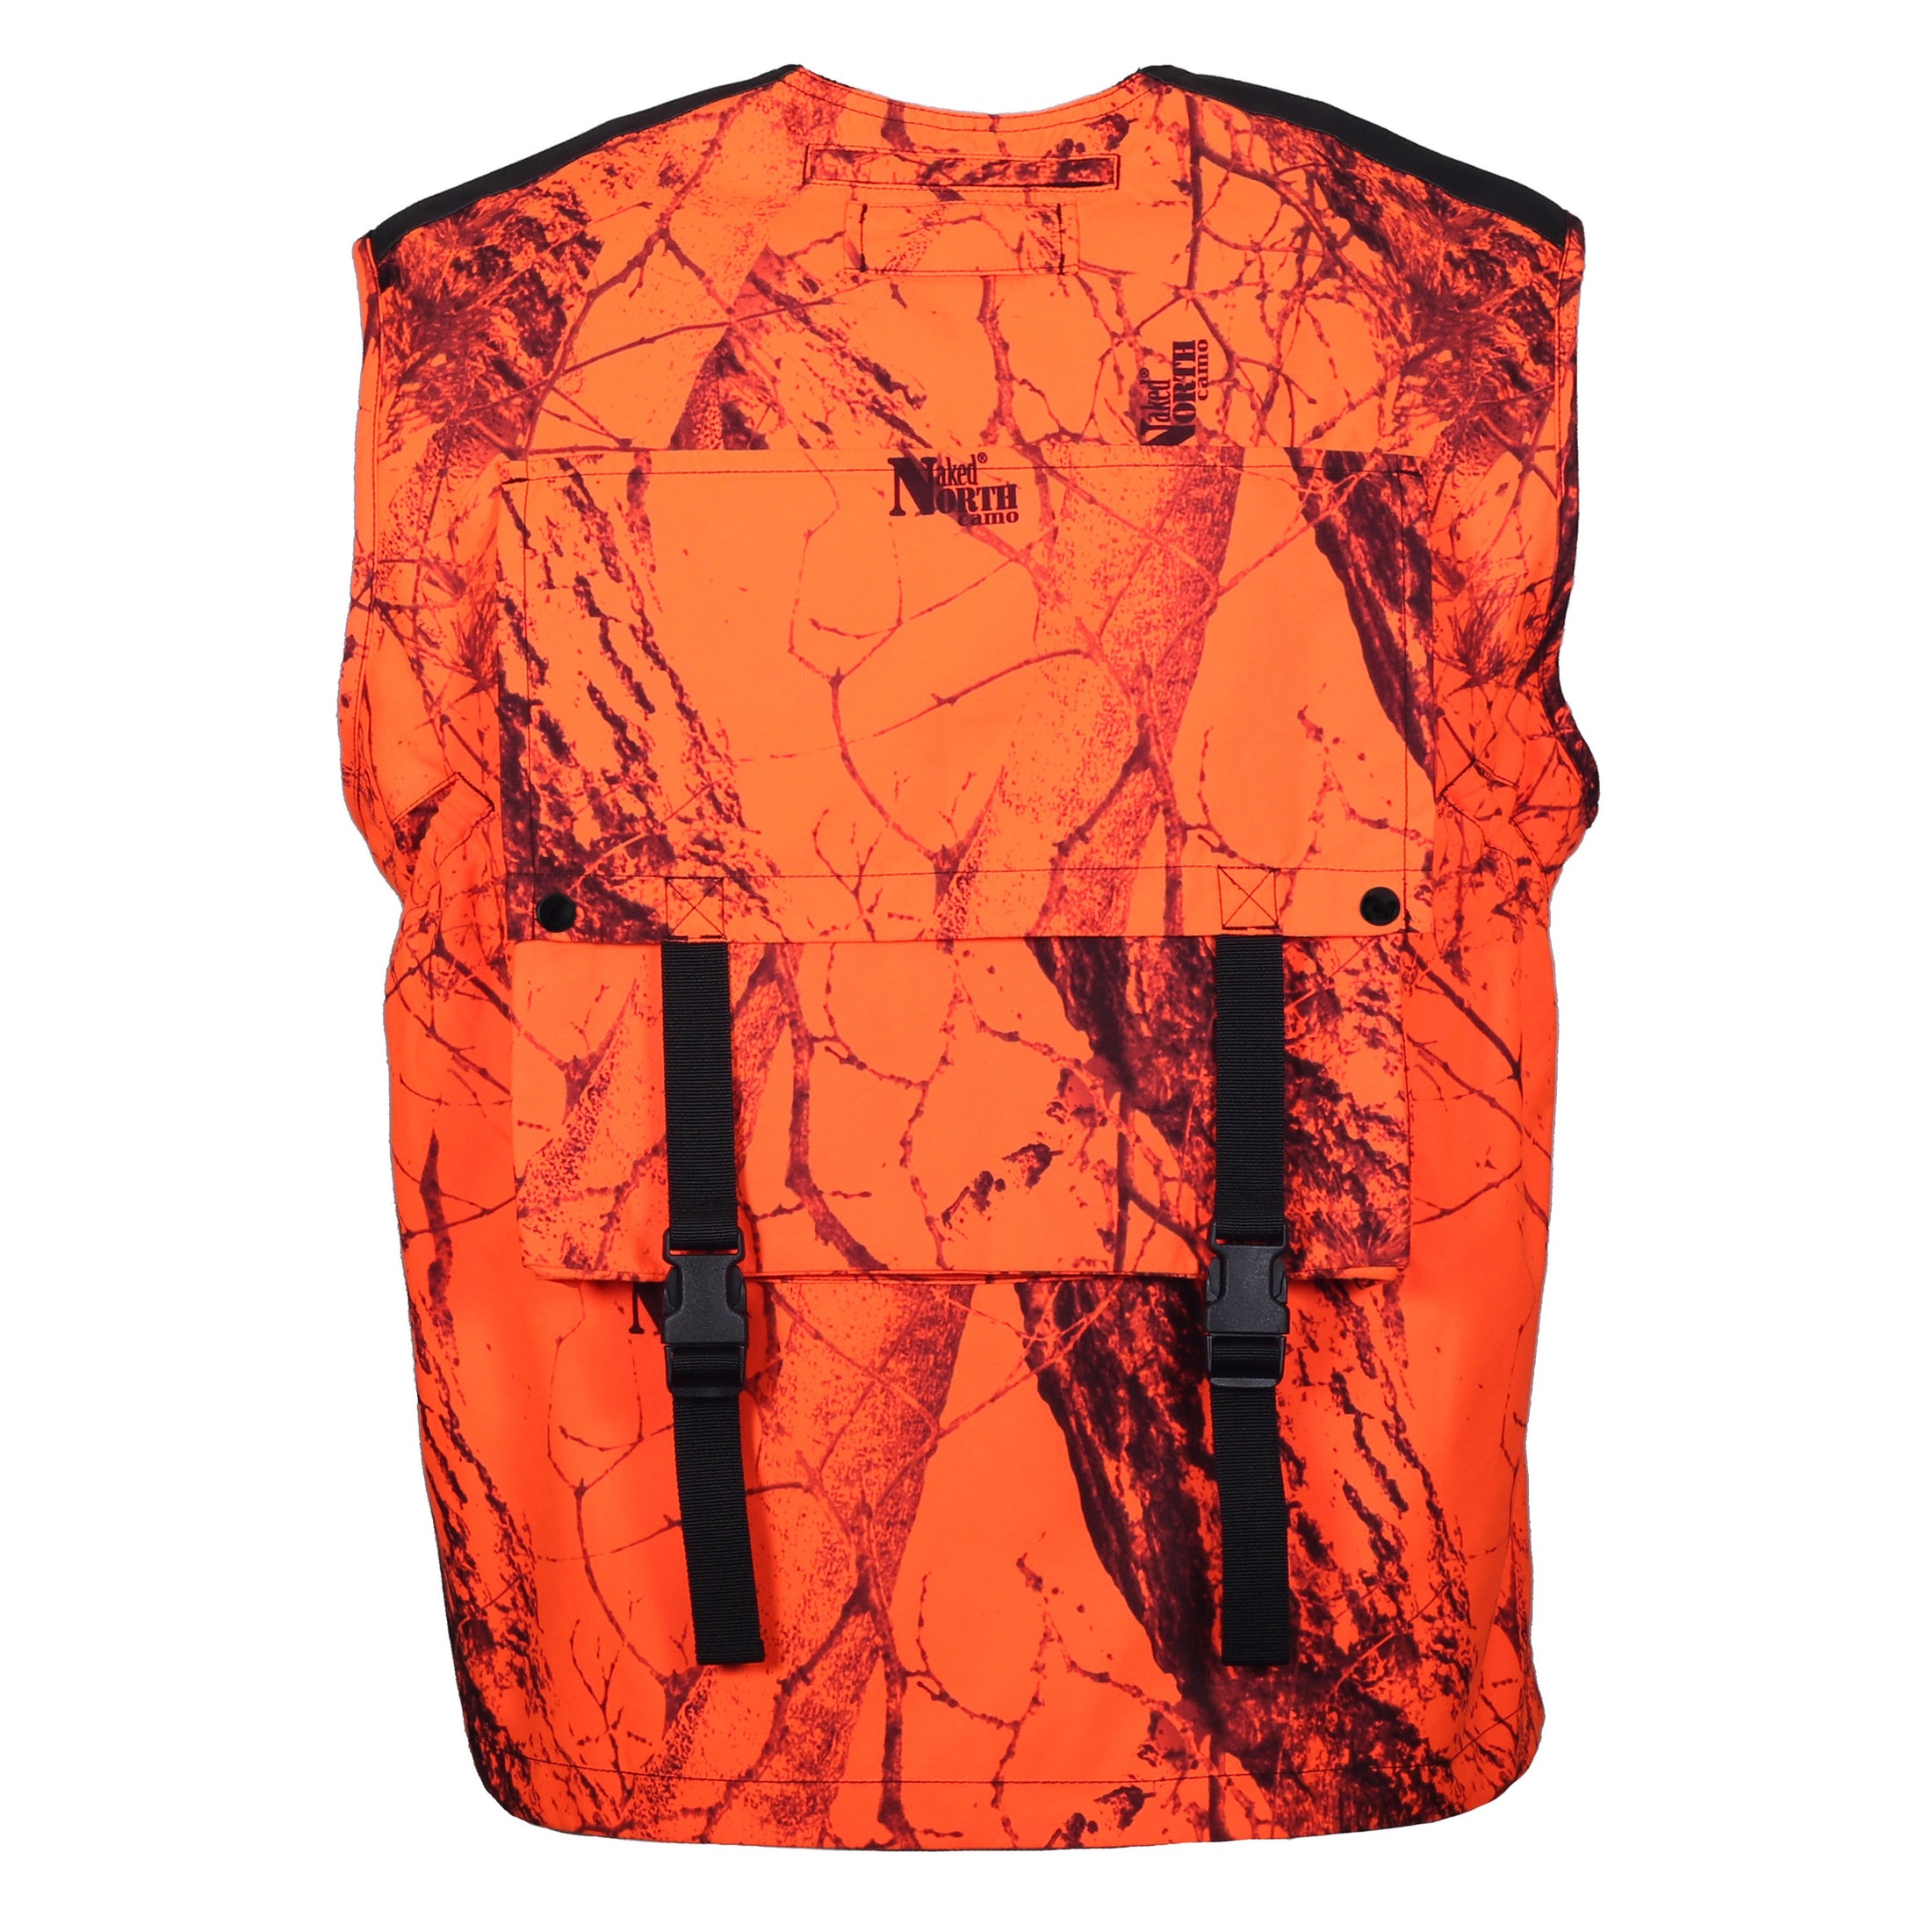 gamehide Mountain Pass Big Game Vest Extreme back (naked north blaze orange camo)